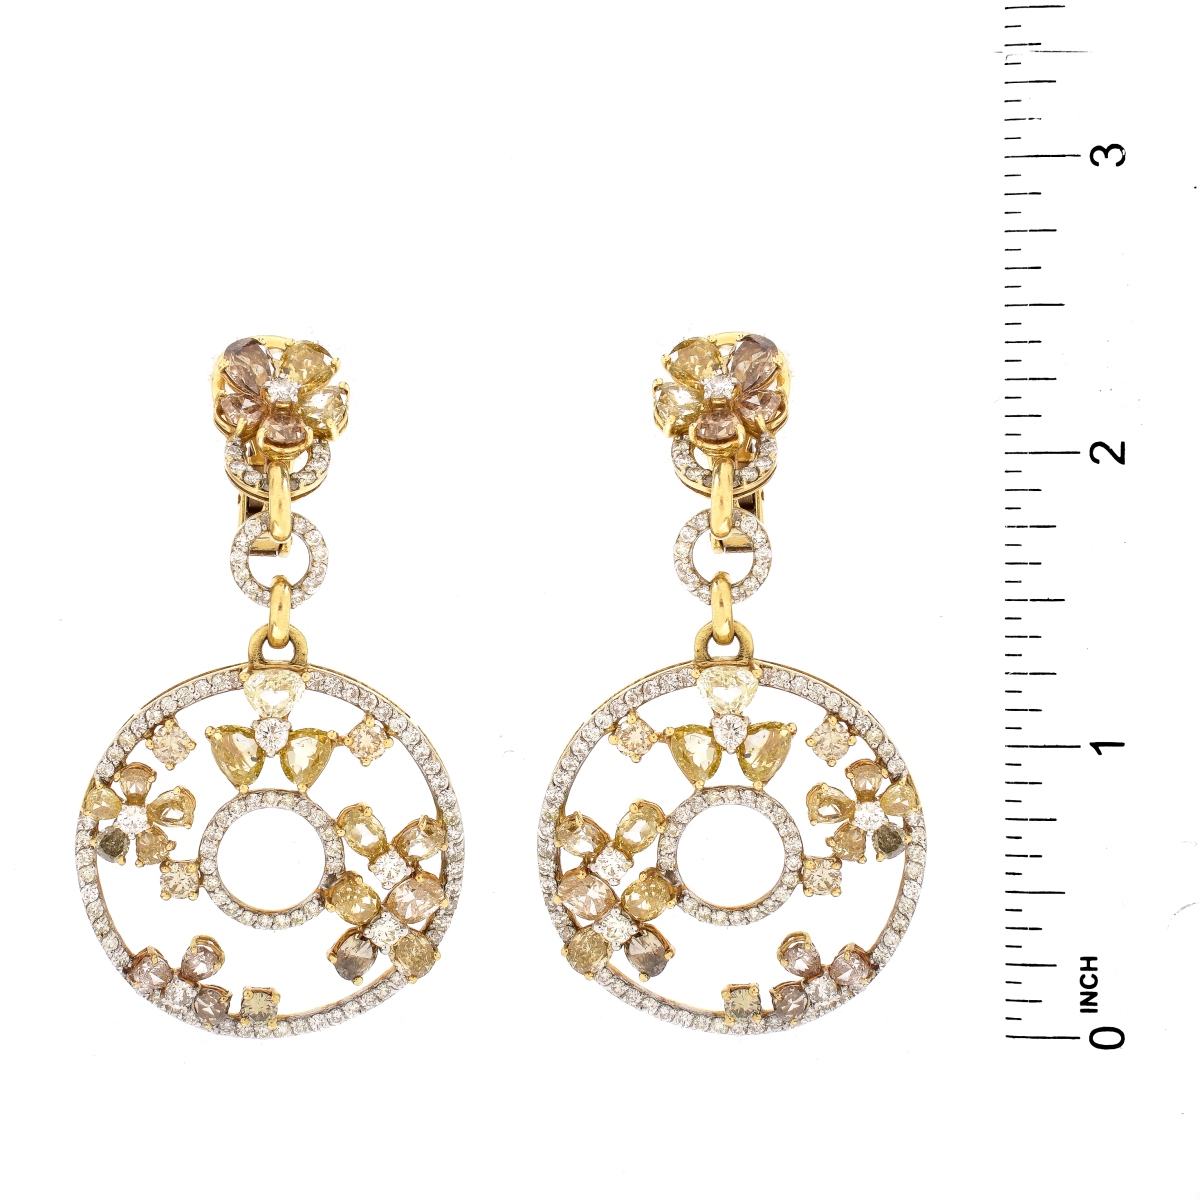 18.0ct TW Diamond Earrings